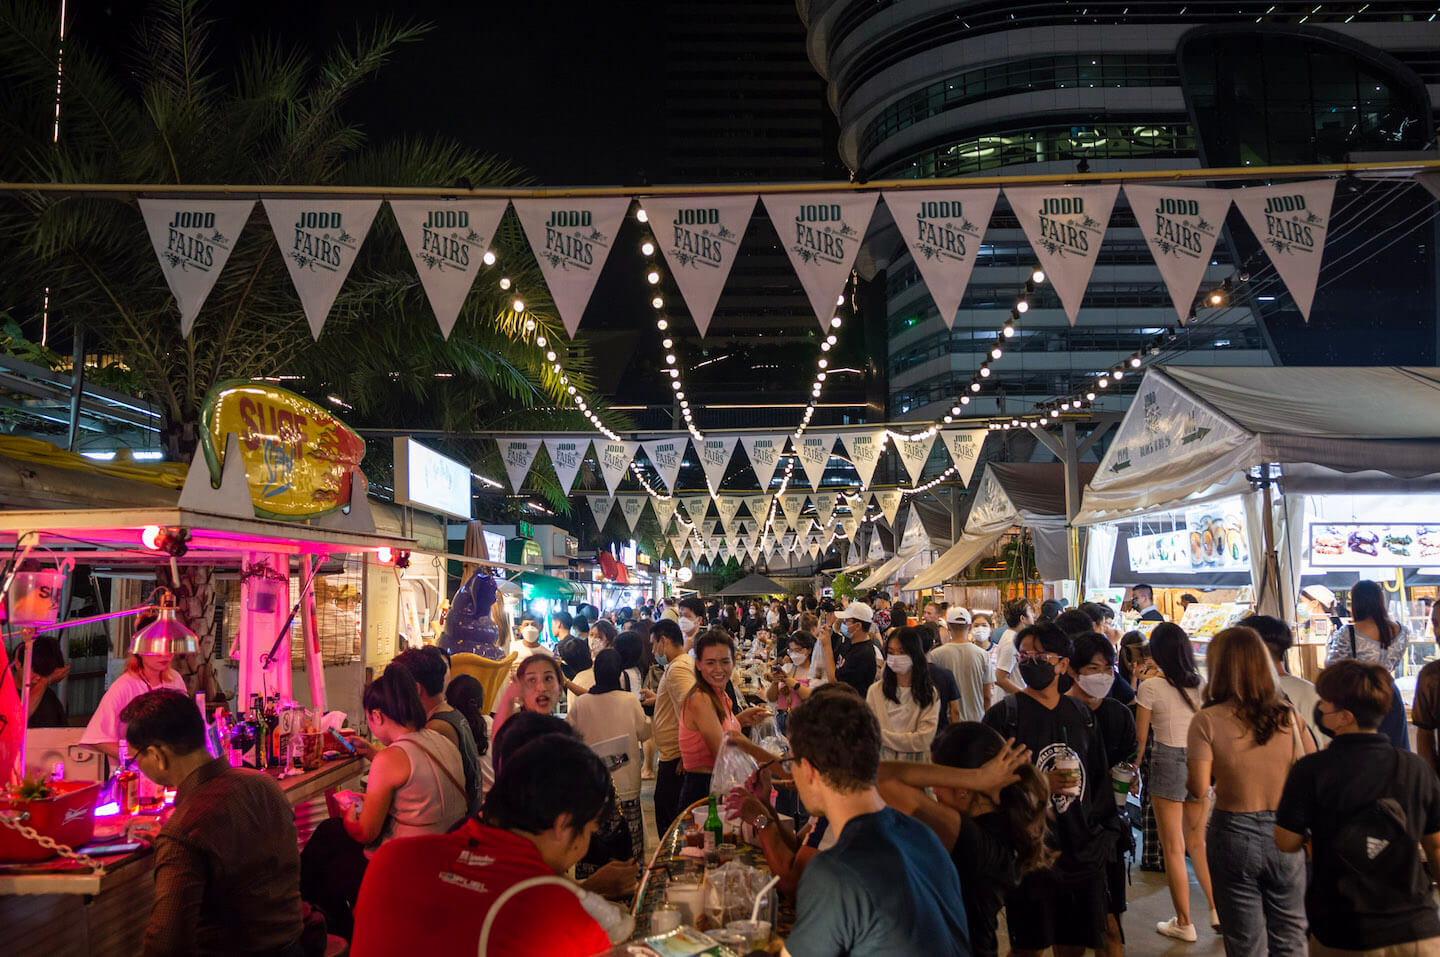 Jodd fairs night market in Bangkok